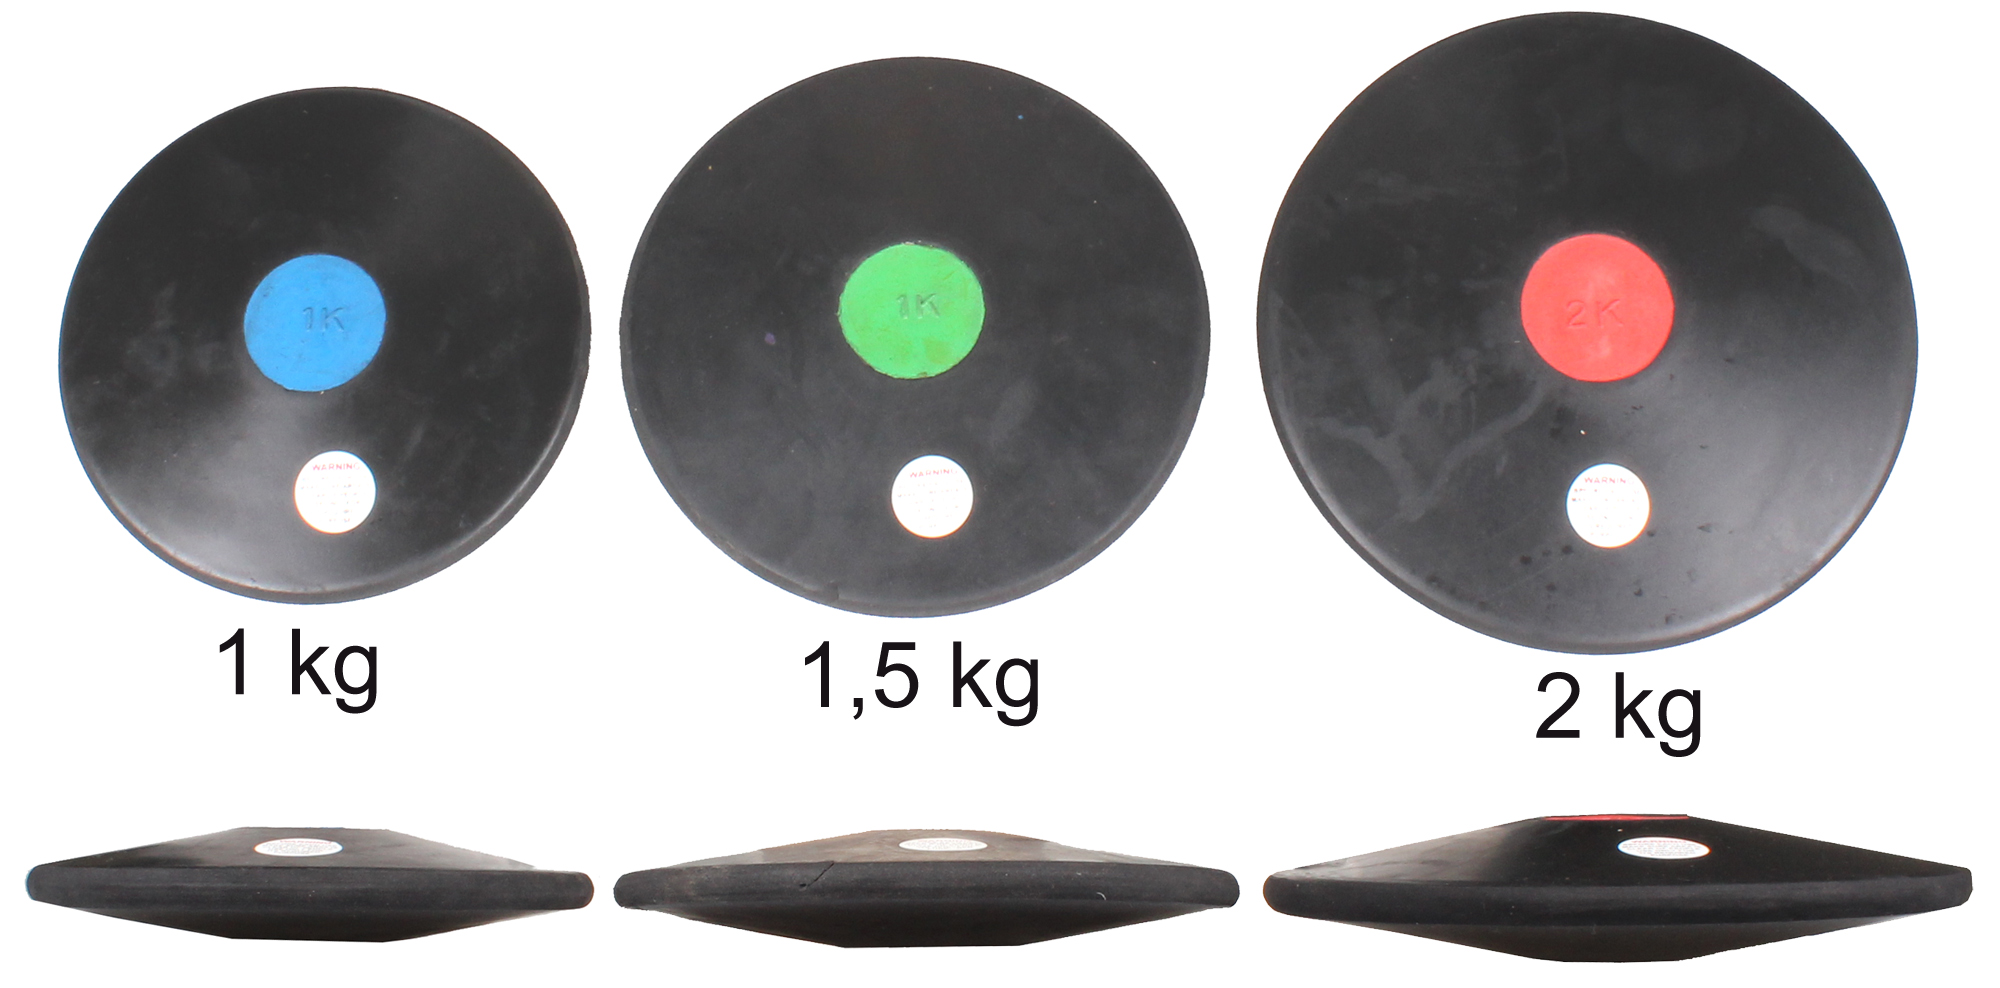 Merco disk Rubber gumový 2 kg